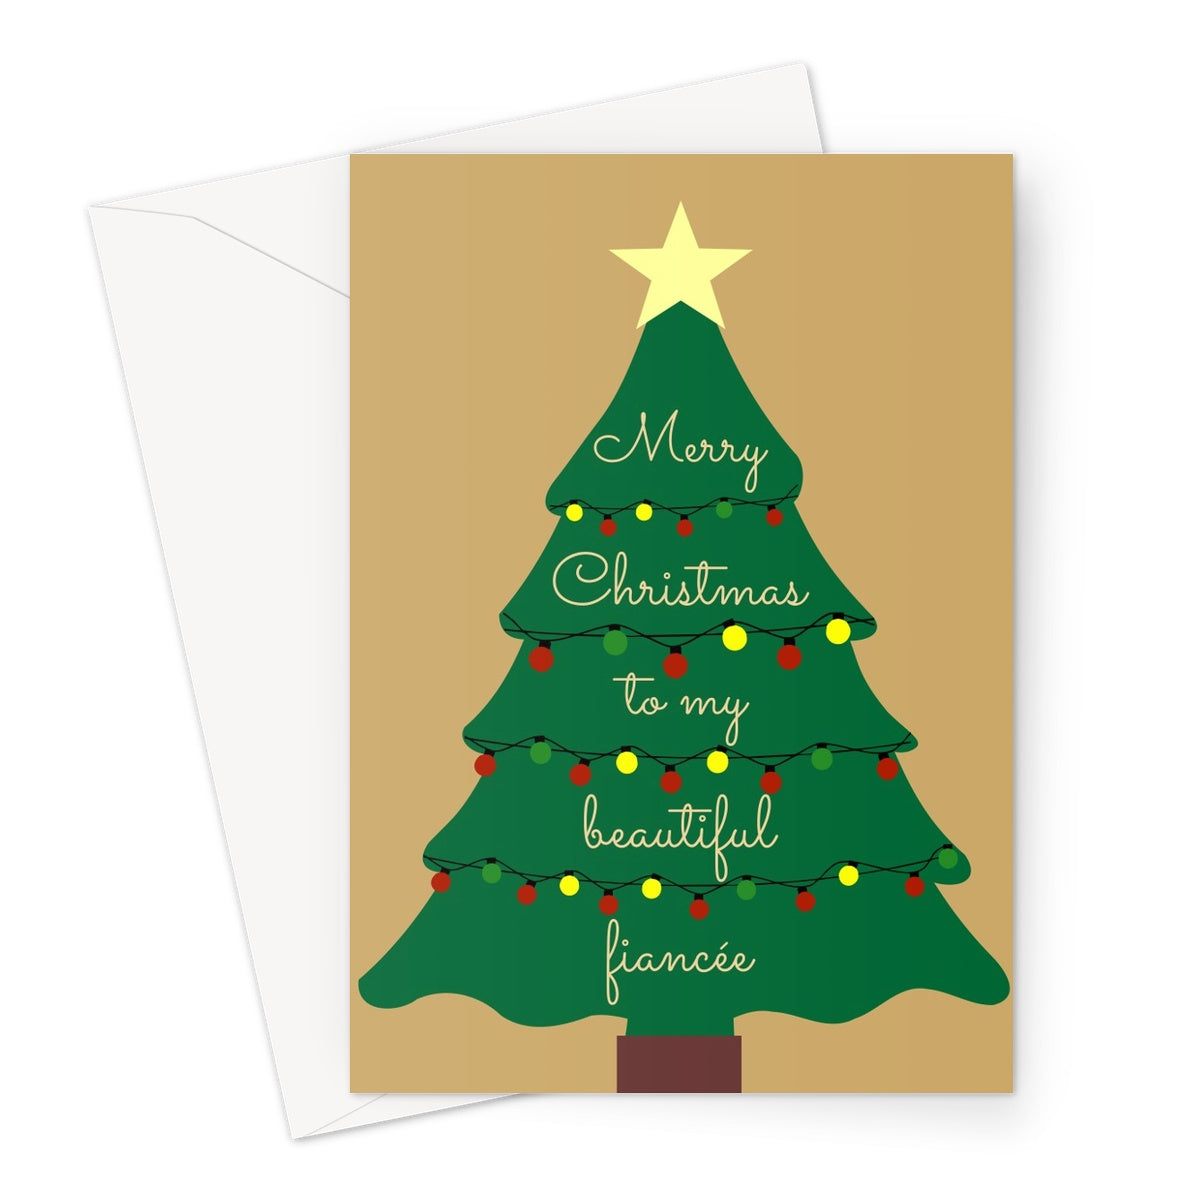 Fiancee christmas customs sturrock Greeting Card